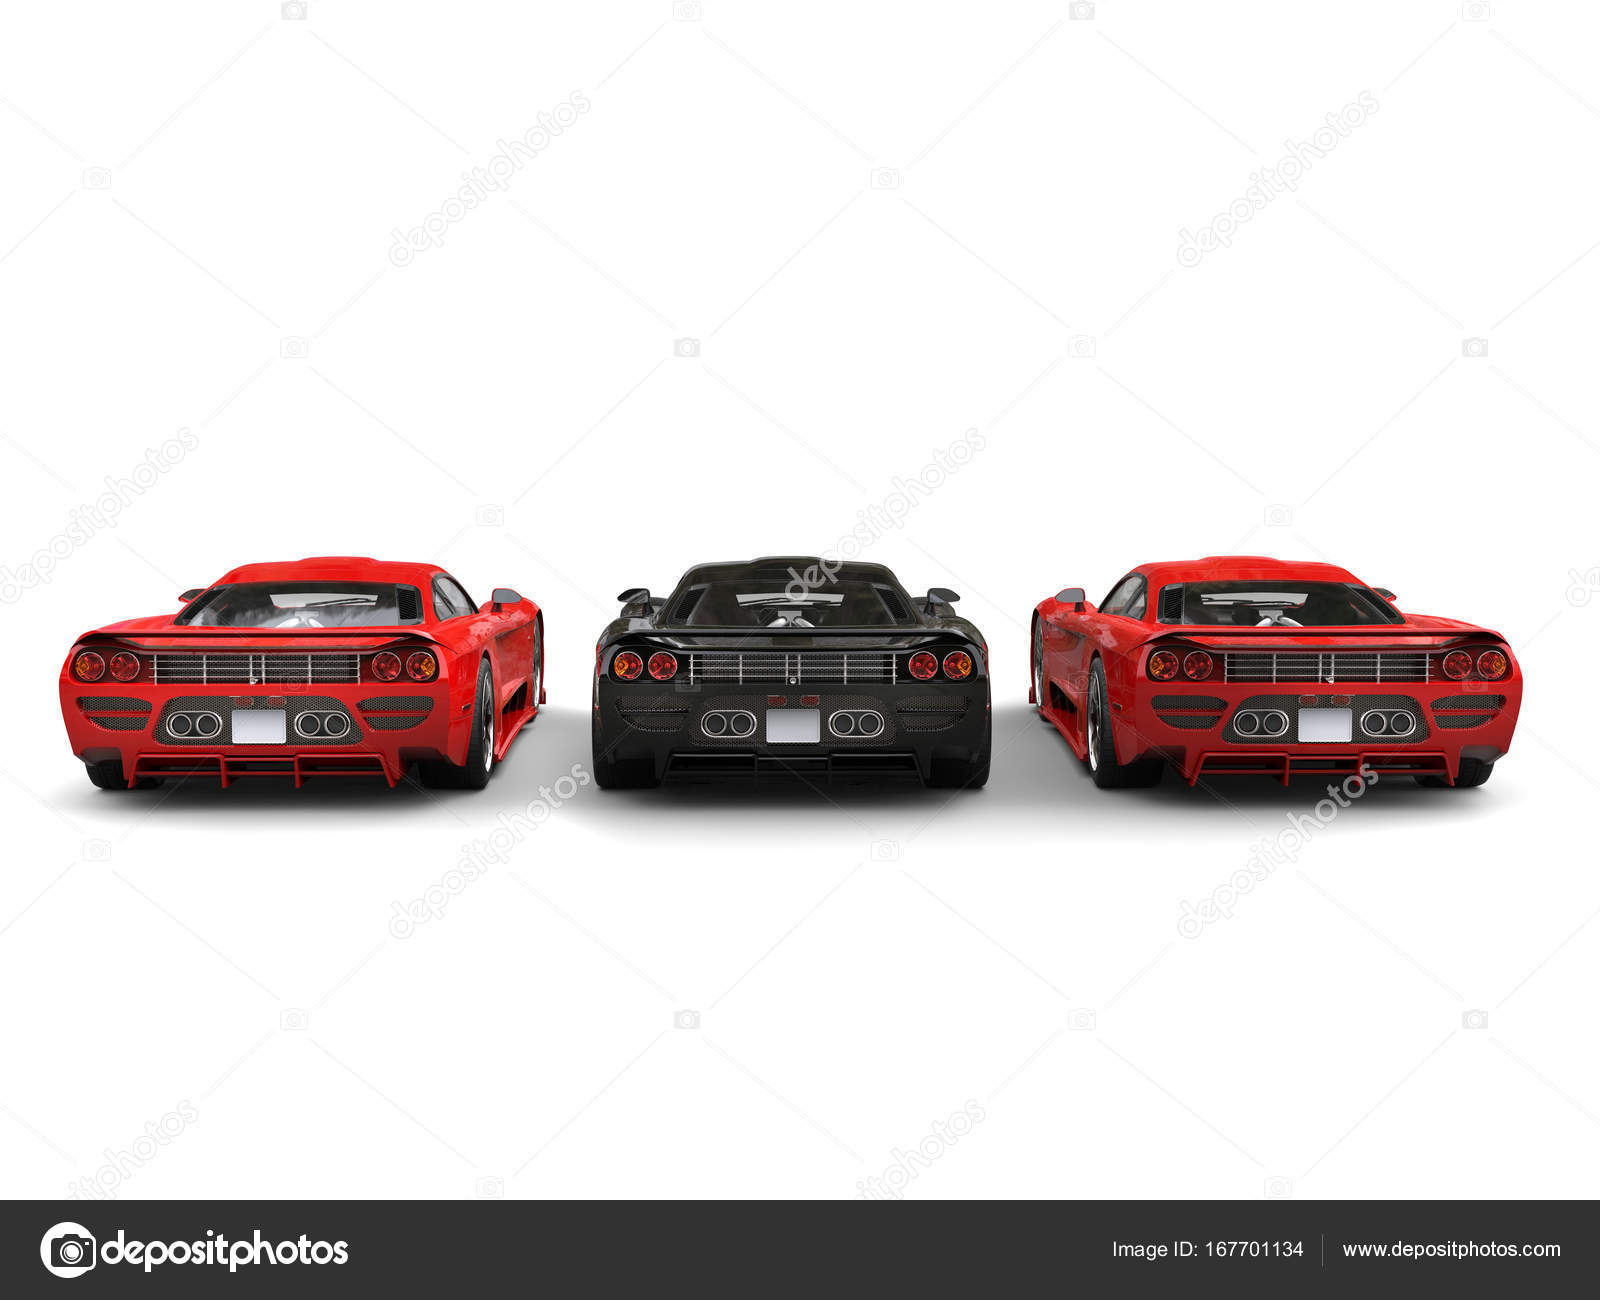 Merchandiser Mundtlig mavepine Red and black super race cars - back view Stock Photo by ©Trimitrius  167701134